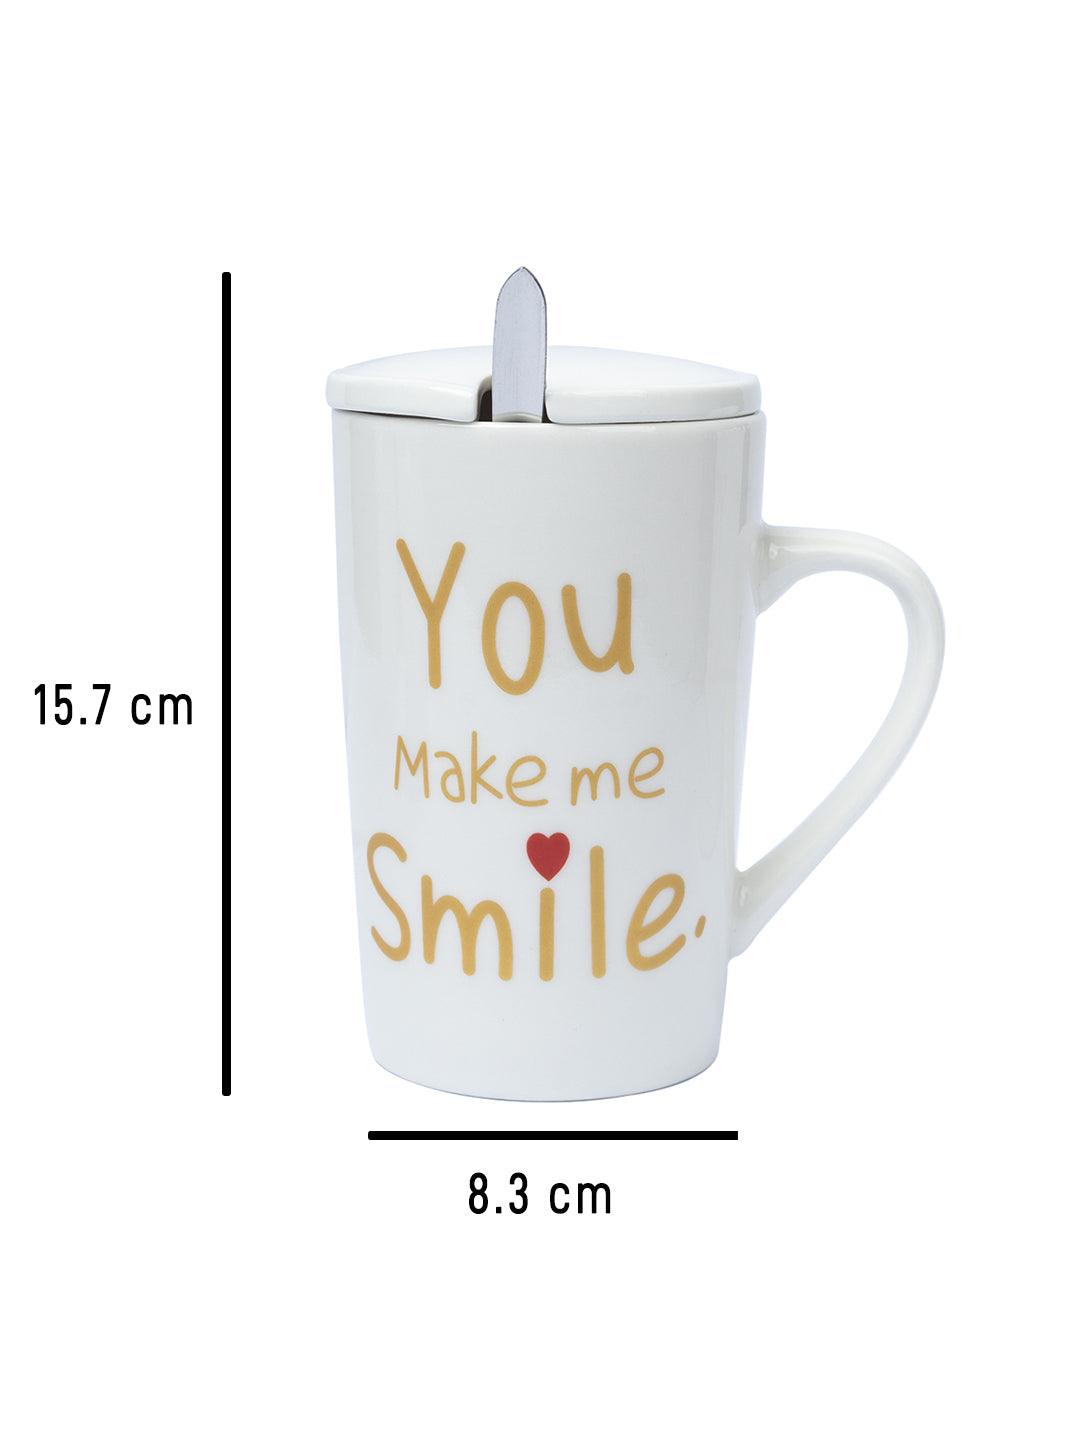 You Make me Simle' Coffee Mug With Lid and Spoon - White,450mL - MARKET 99